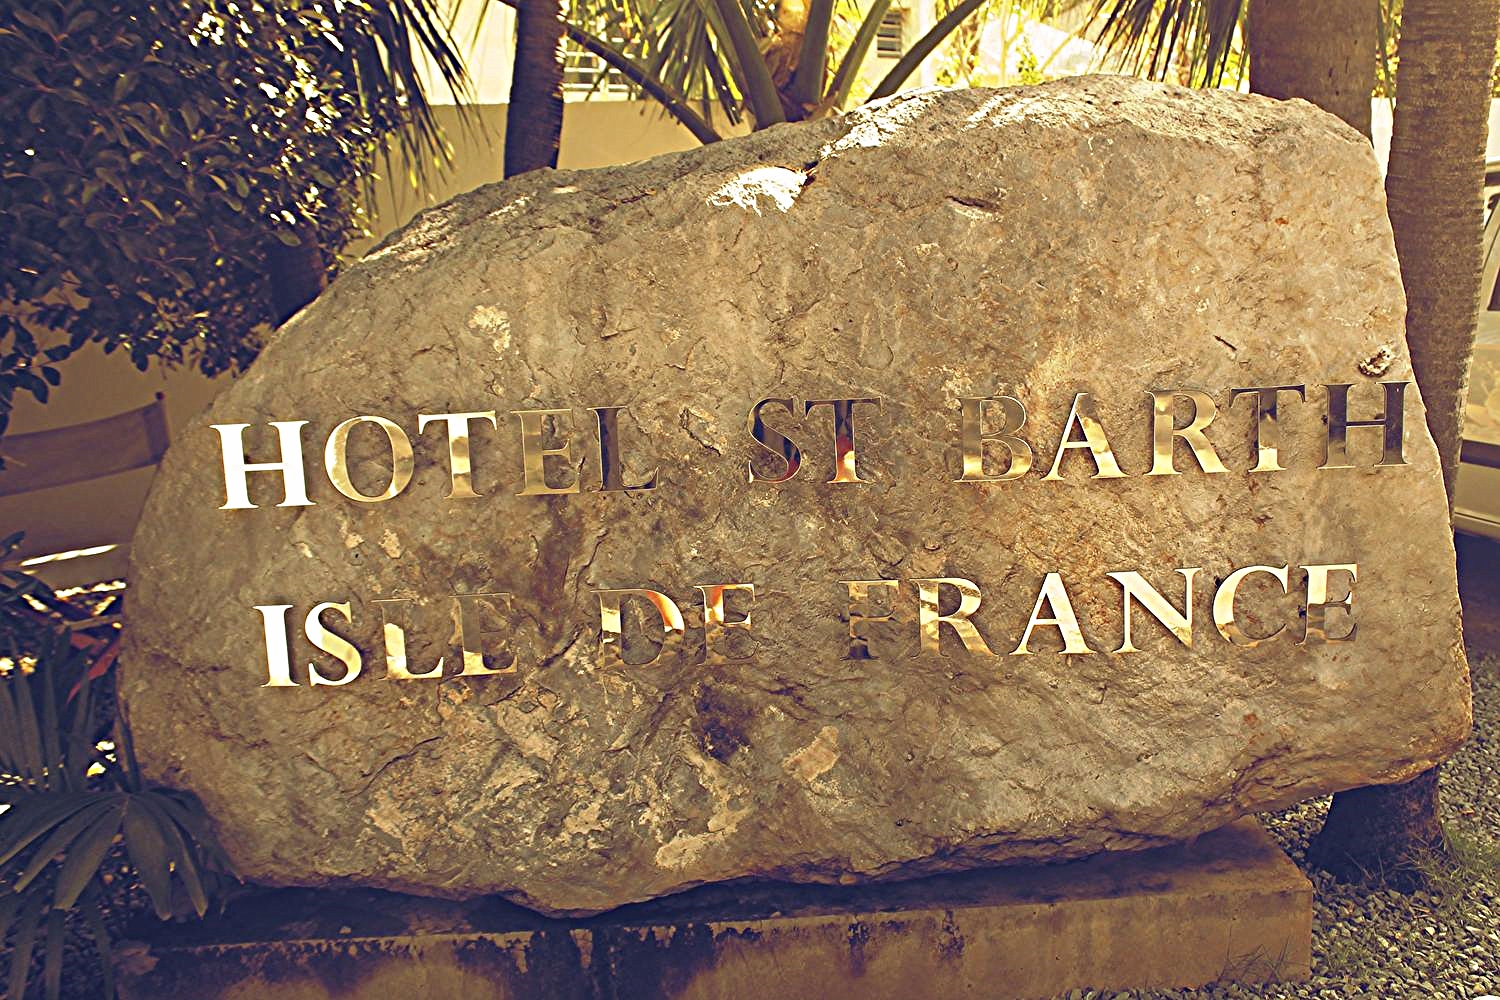 Hotel St Barts - Isle de France